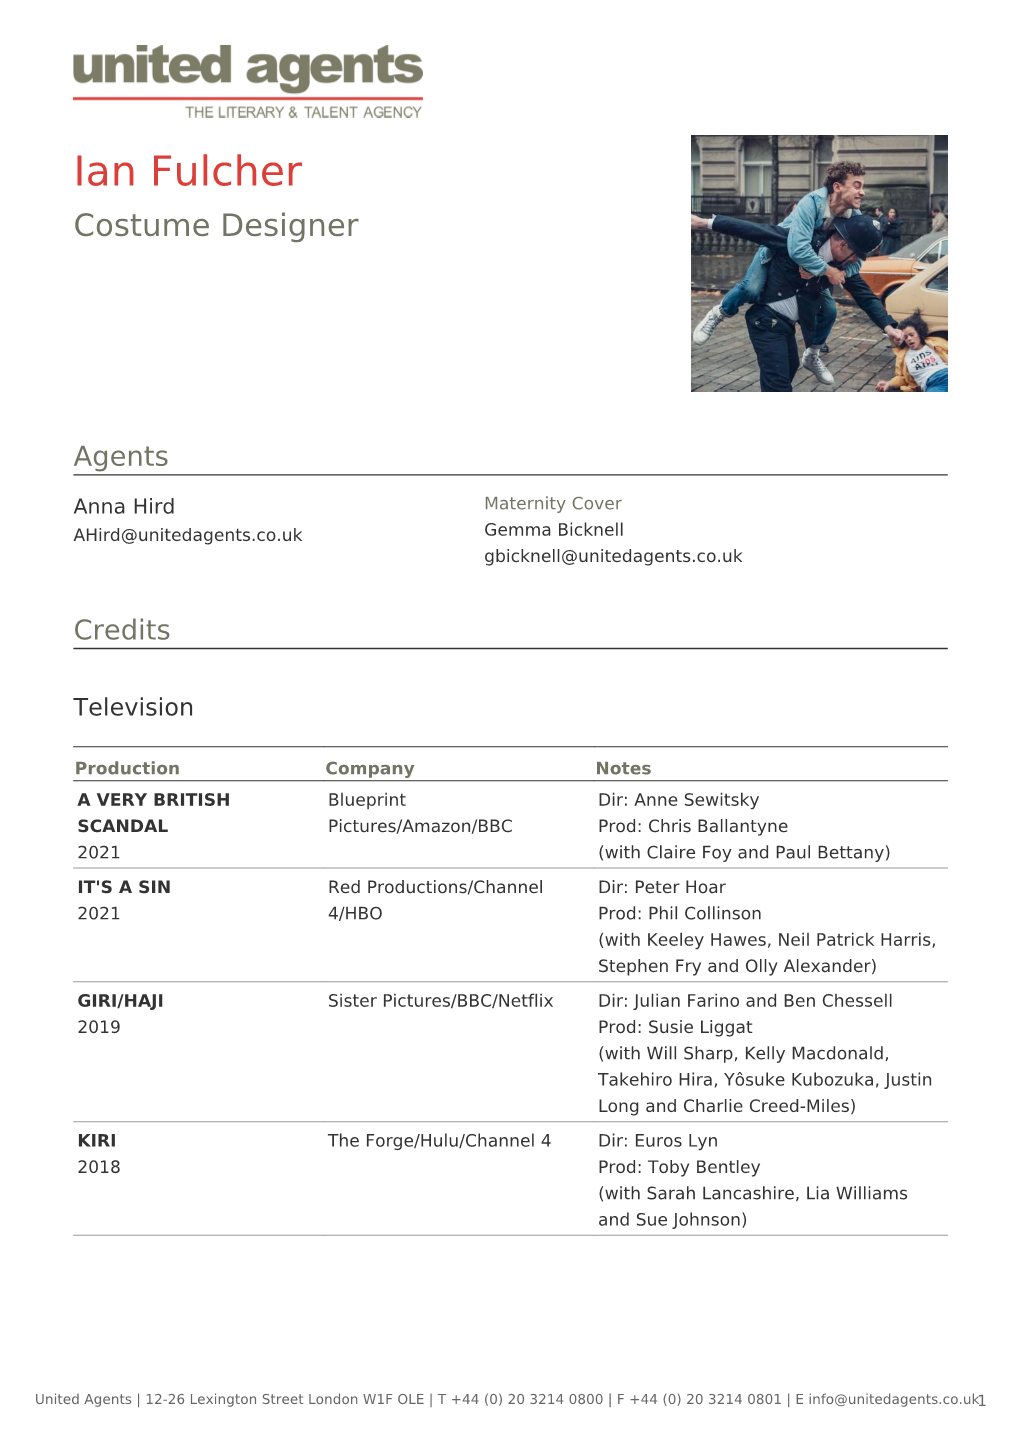 Ian Fulcher Costume Designer